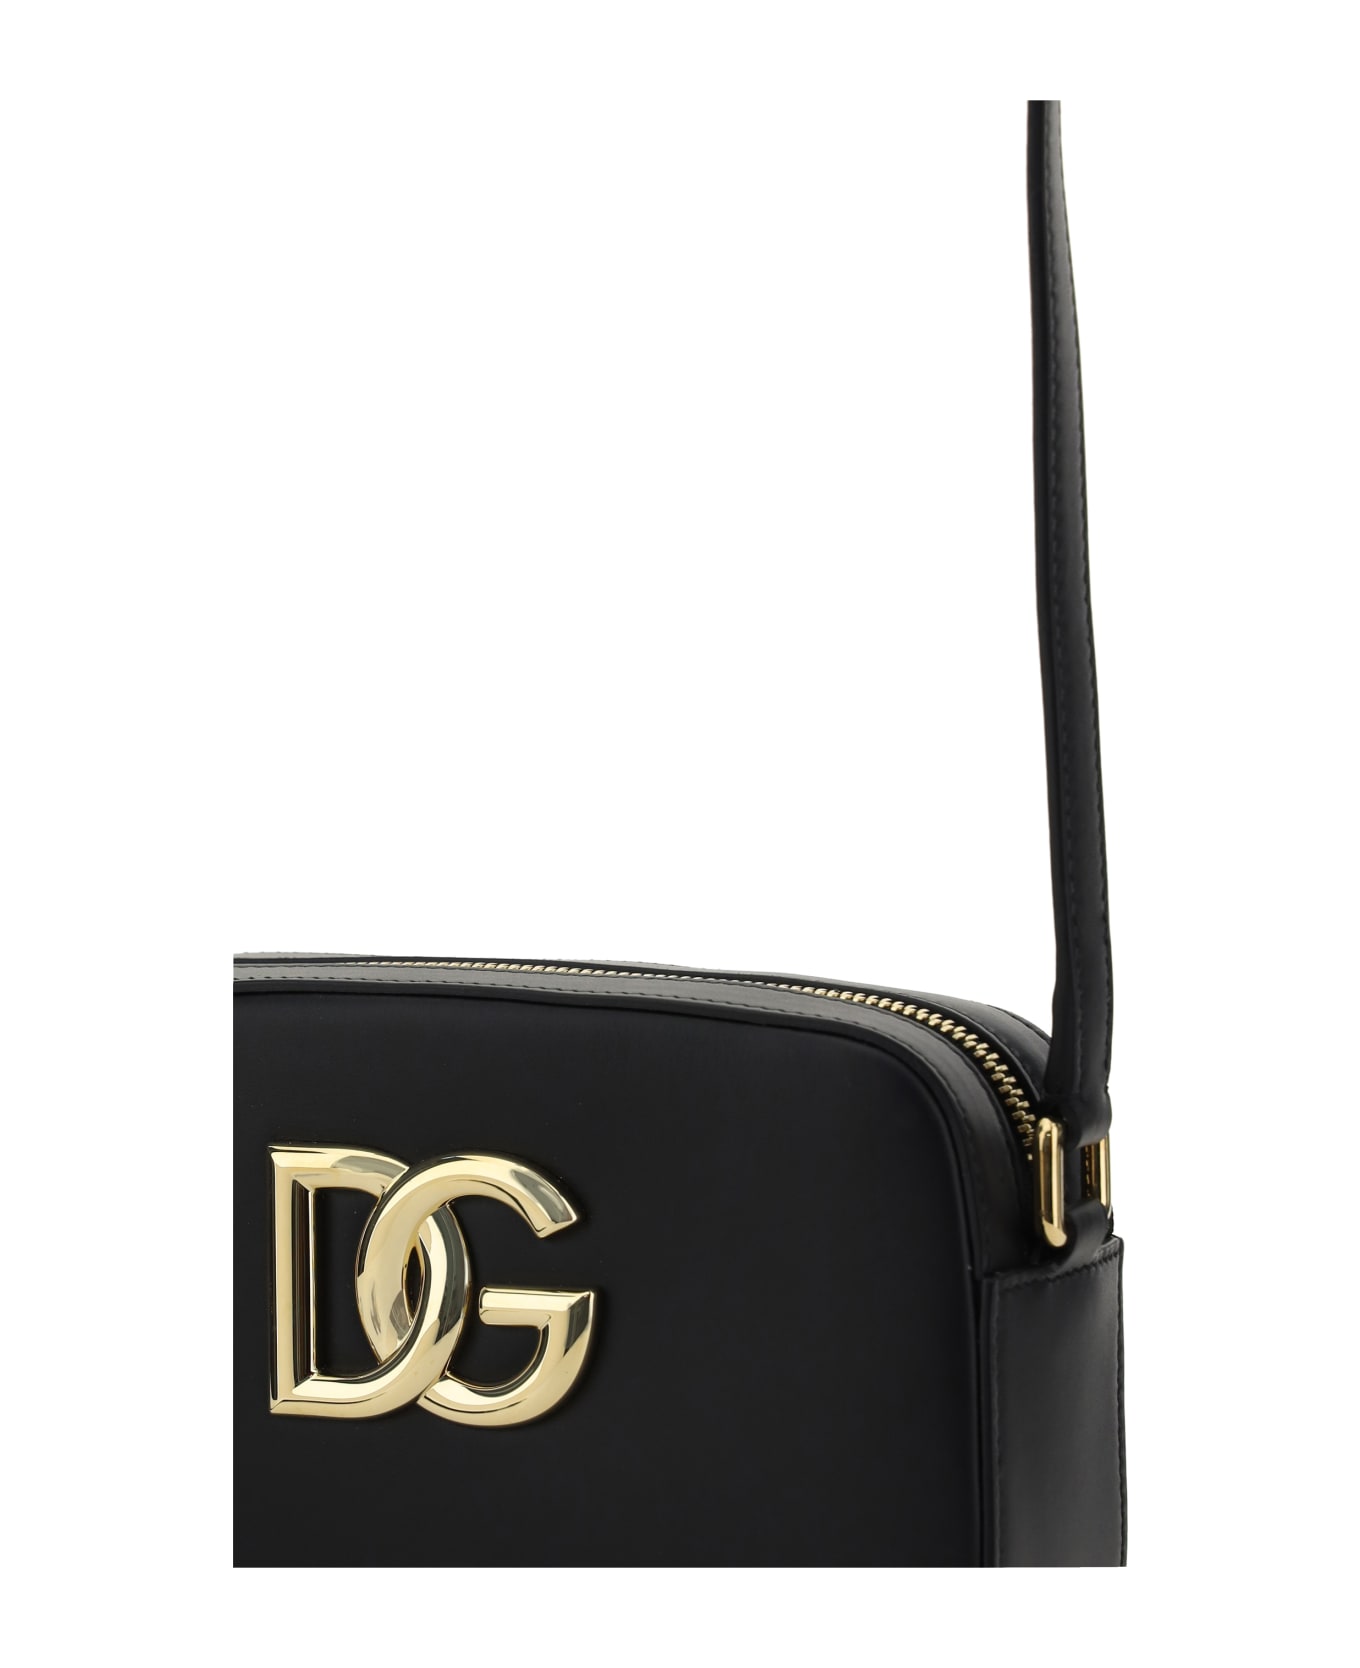 Dolce & Gabbana Camera Bag - Black